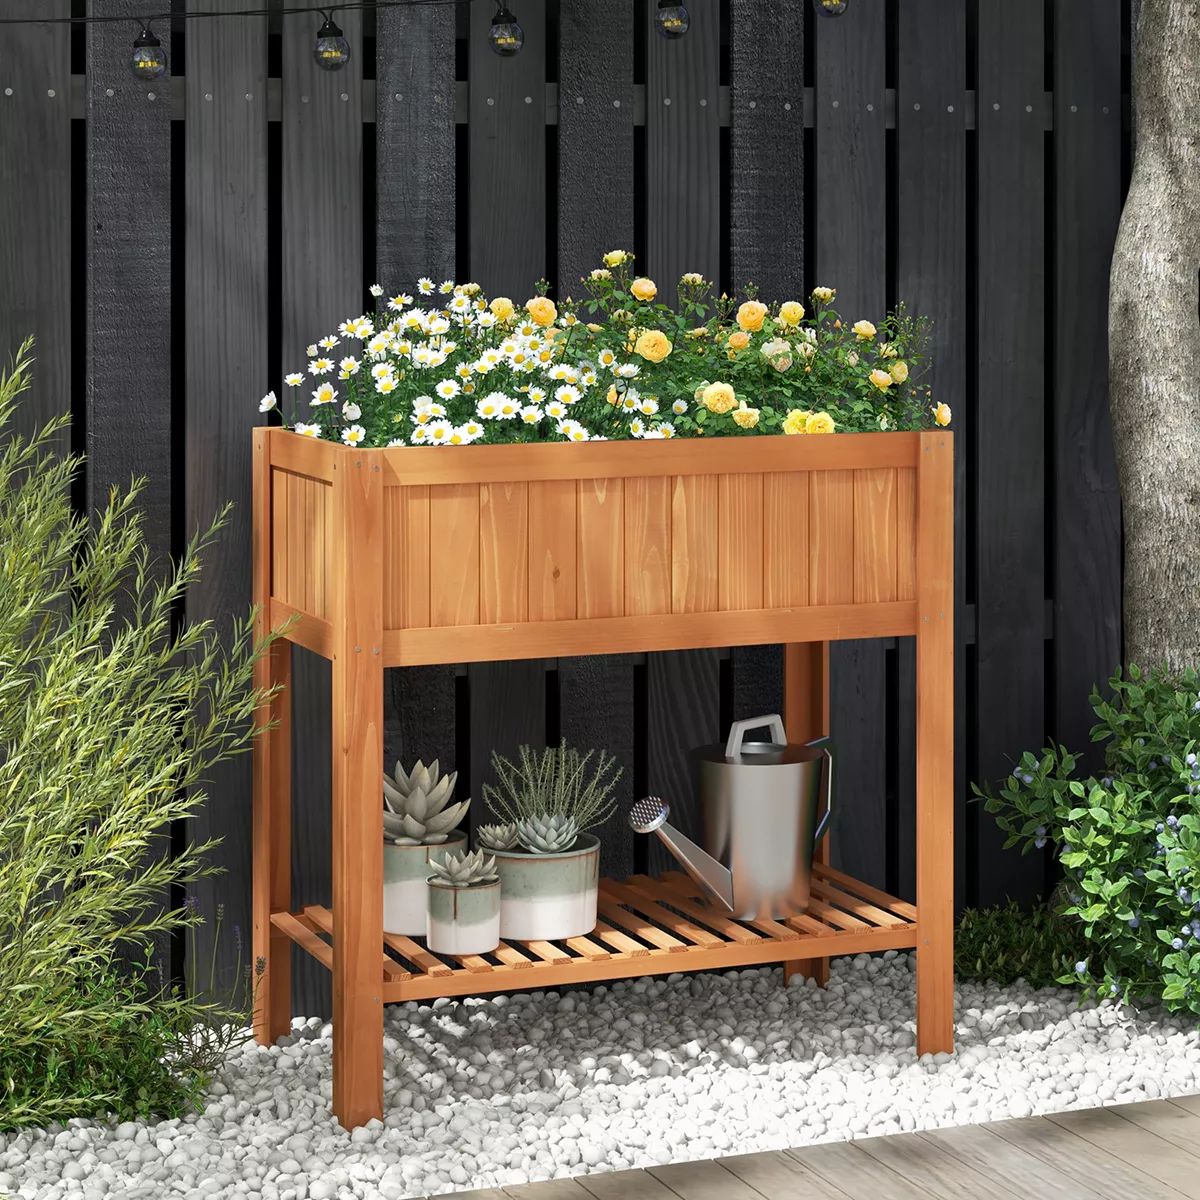 Costway Raised Garden Bed 39 x 20 x 39 in Outdoor Fir Wood Planter Box with Storage Shelf | Target